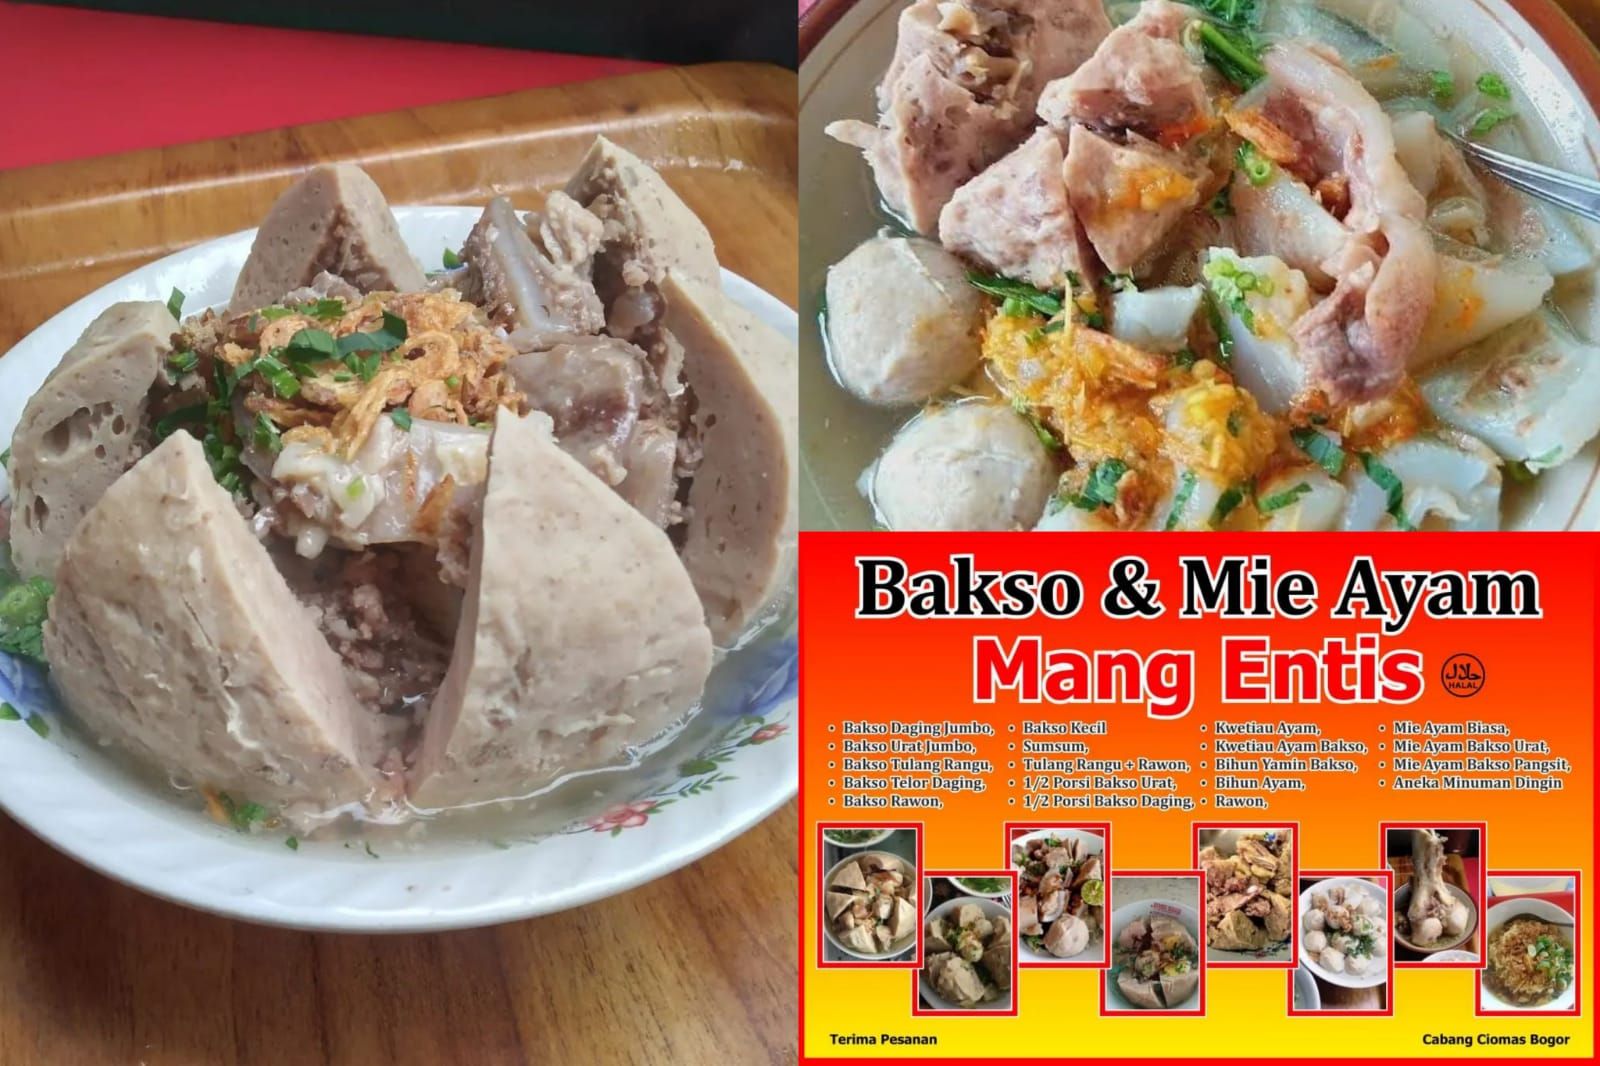 Ini dia wisata kuliner bakso di Bogor yang punya bakso super jumbo dengan isian full daging, kuahnya gurih dan lezat.